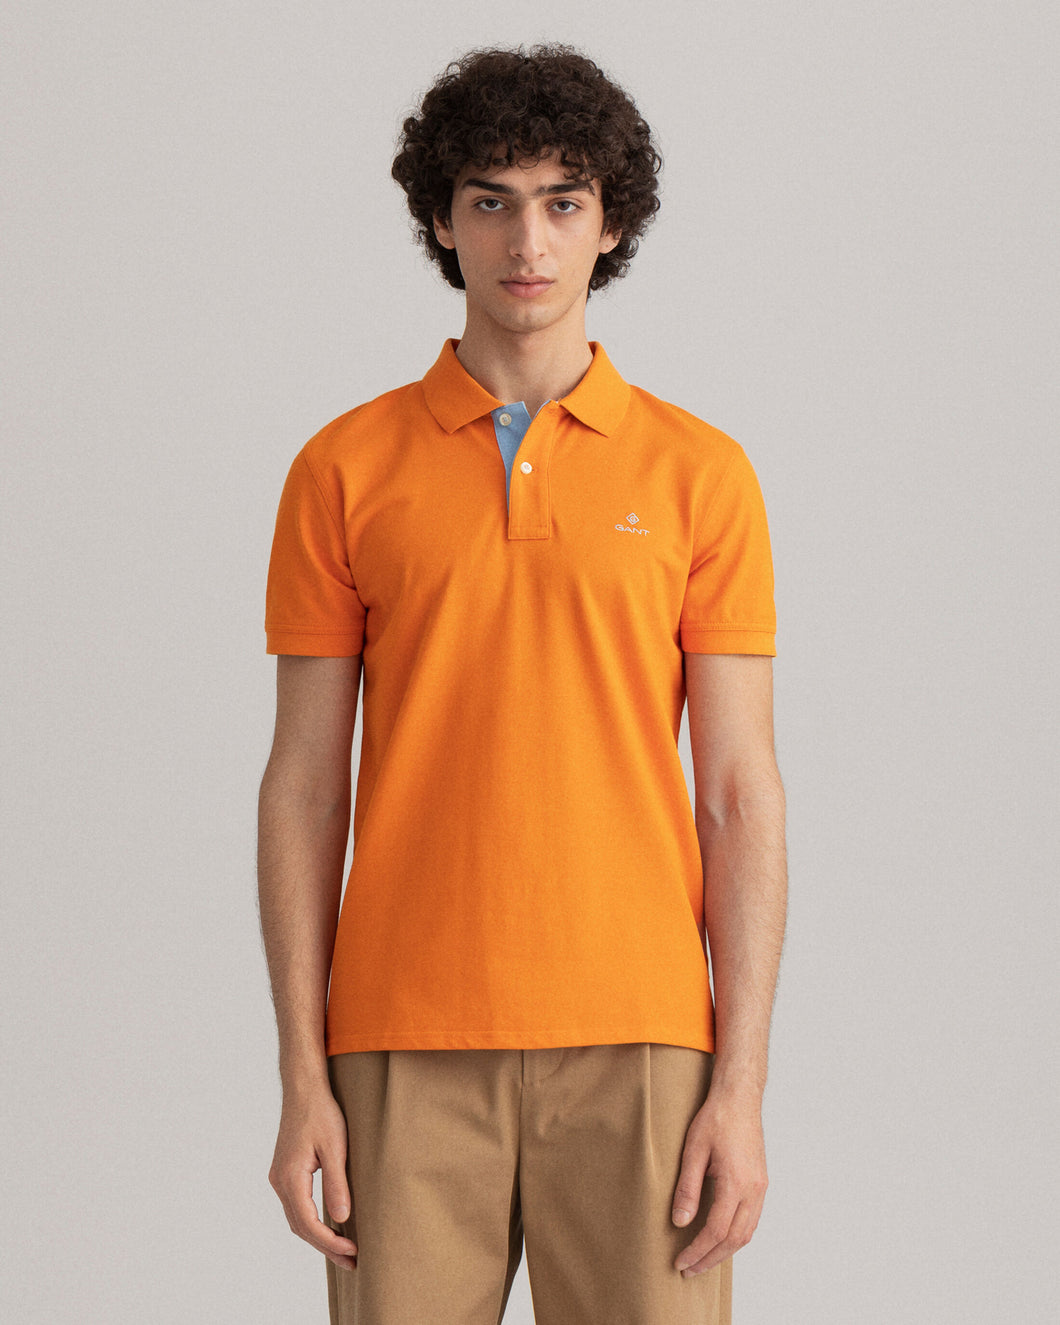 GANT - Contrast Collar Pique Polo, Russet Orange (L Only)